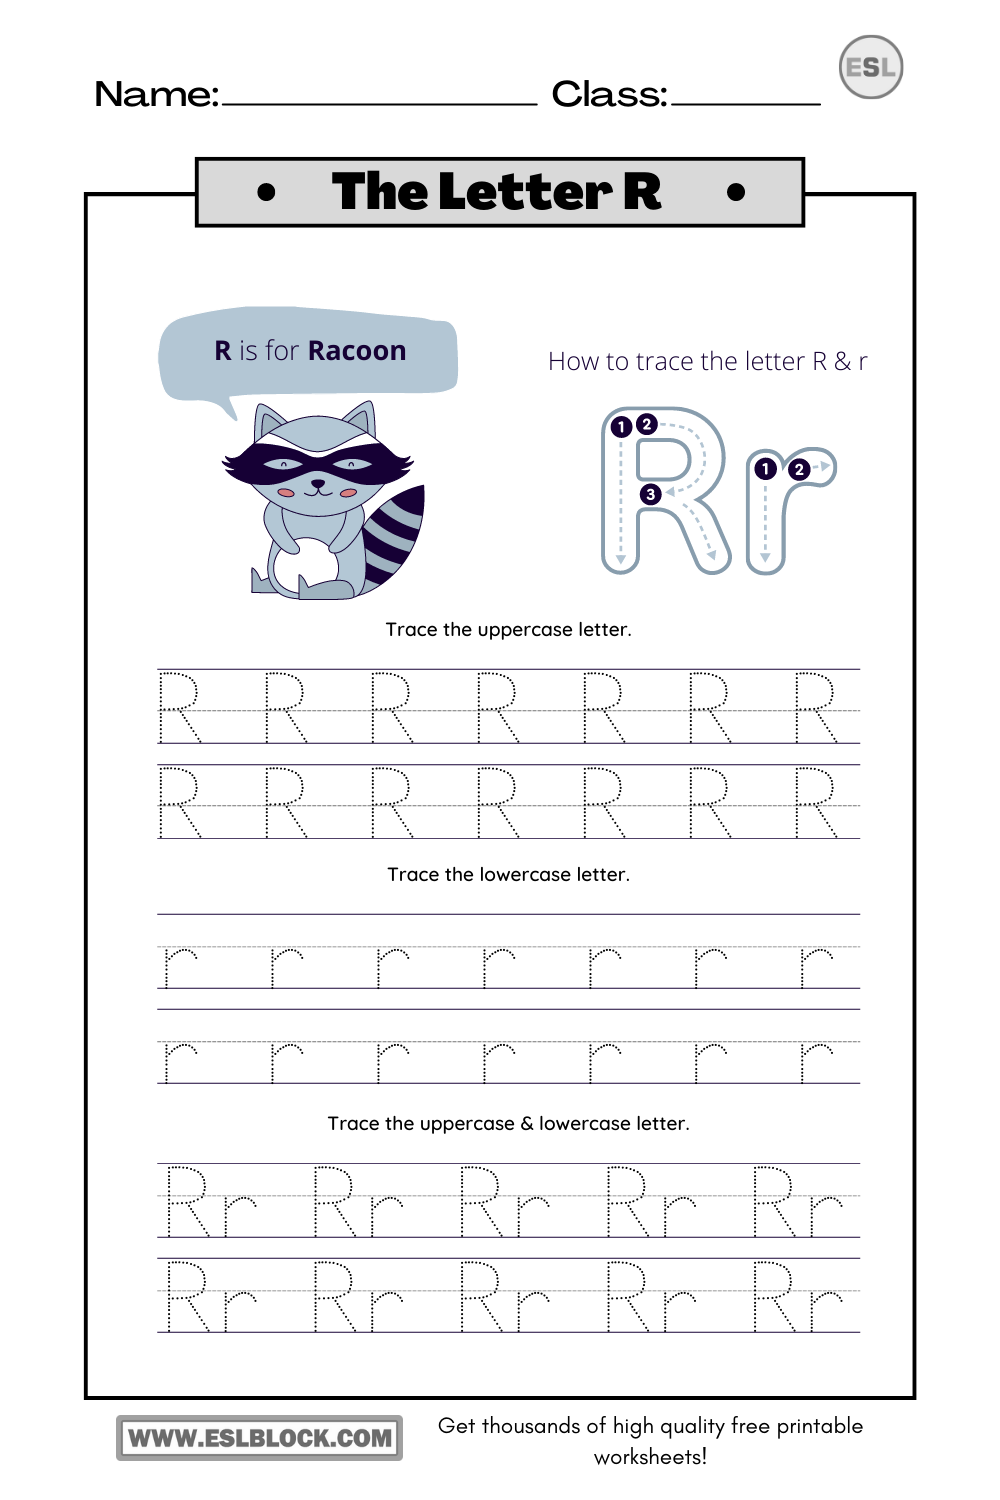 Alphabet R Printable Worksheets, Free Worksheets, Kindergarten Worksheets, Letter R Printable Worksheets, Preschool Worksheets, Tracing the Letter R, Tracing the letter R Printable, Tracing the Letter R Worksheets, Tracing Worksheets, Worksheets